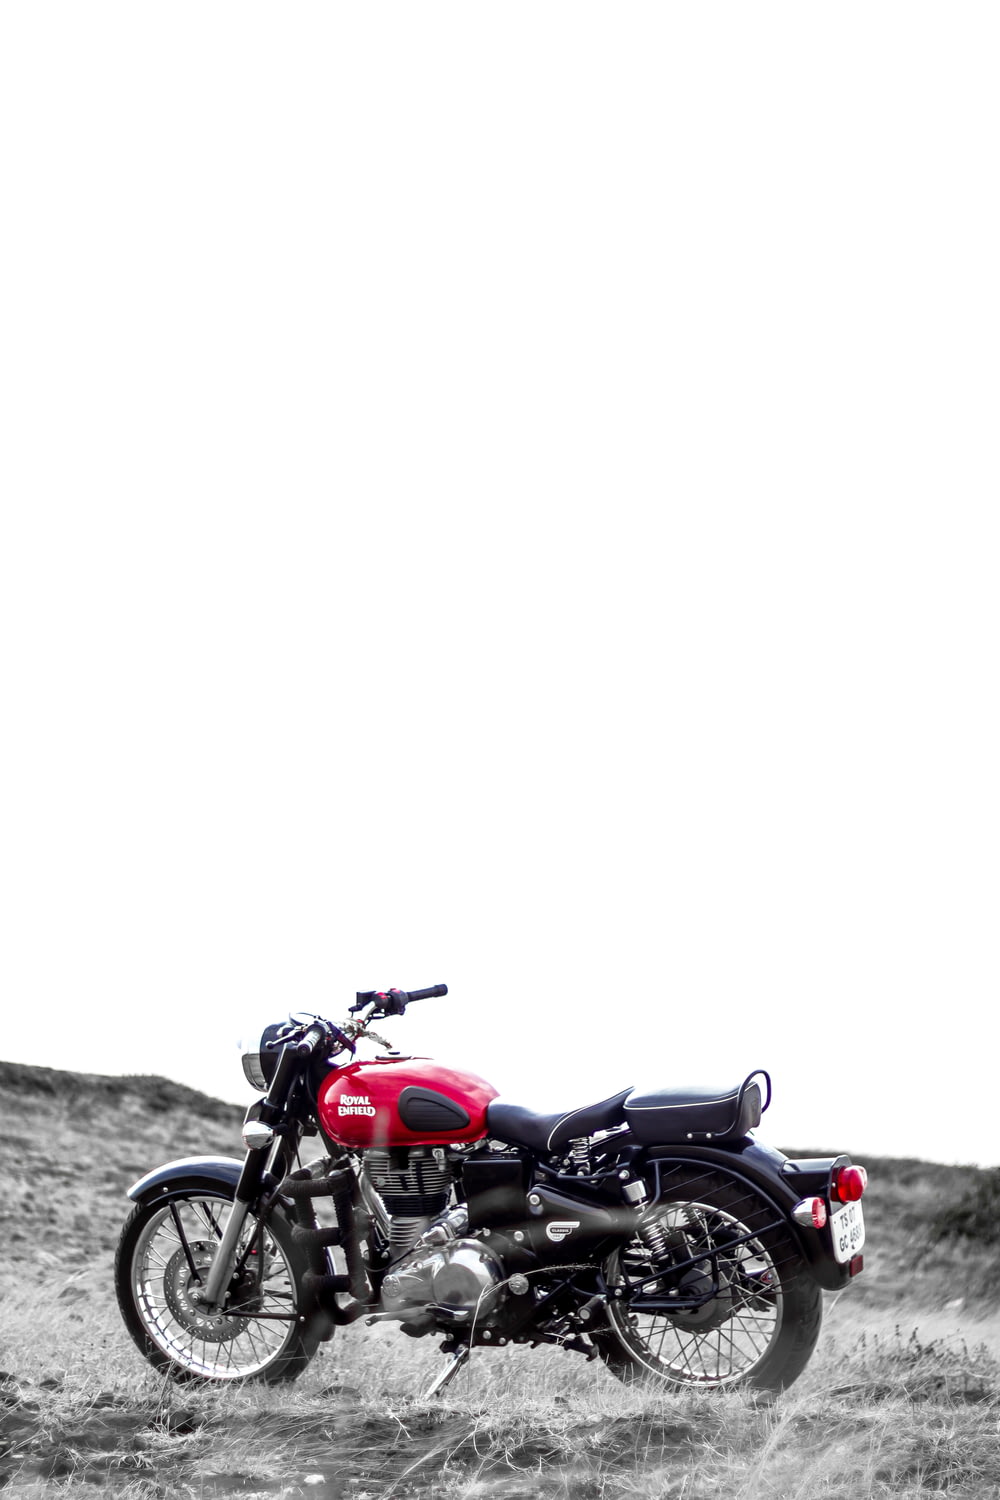 Motocicleta estándar negra y roja